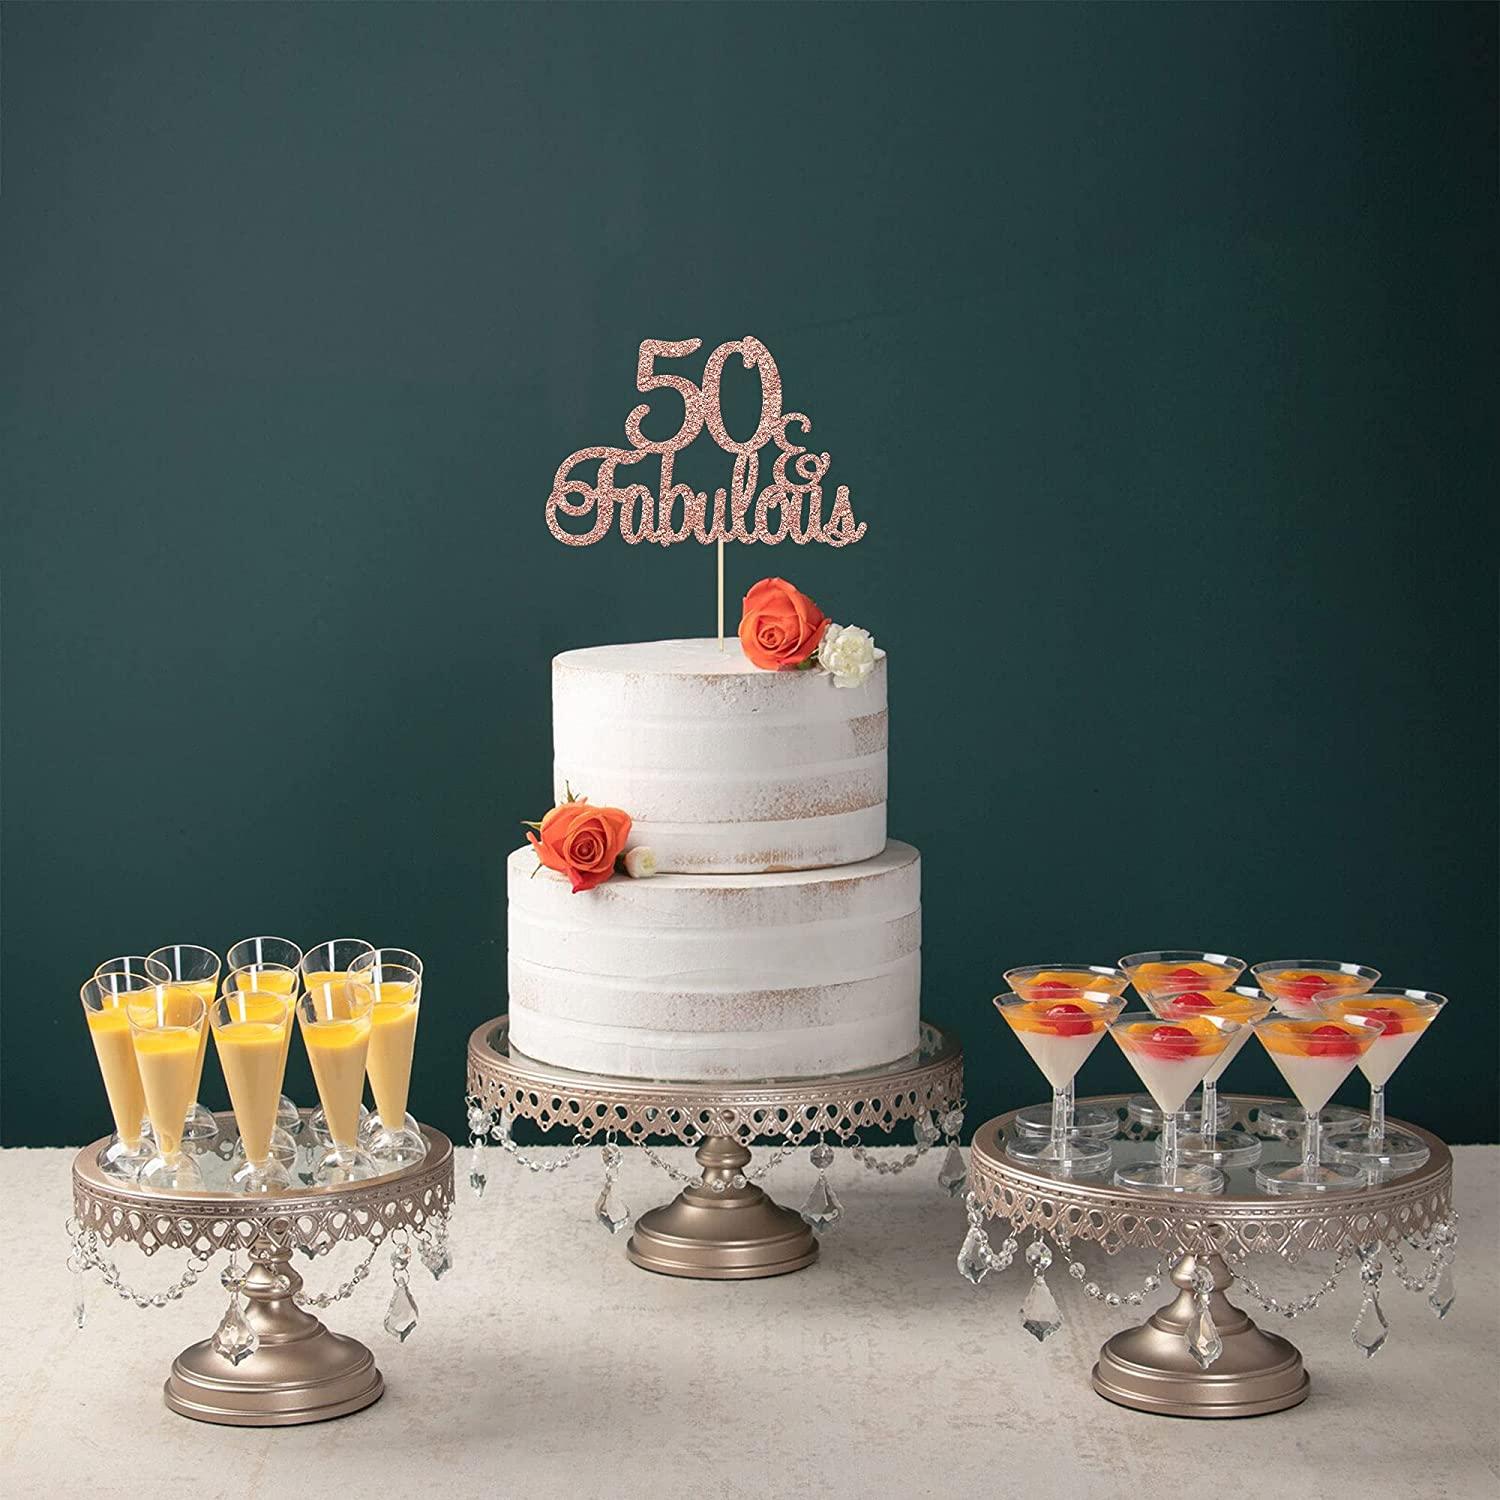 Pretty Cake Ideas For Every Celebration : Botanical themed 50th birthday  cake